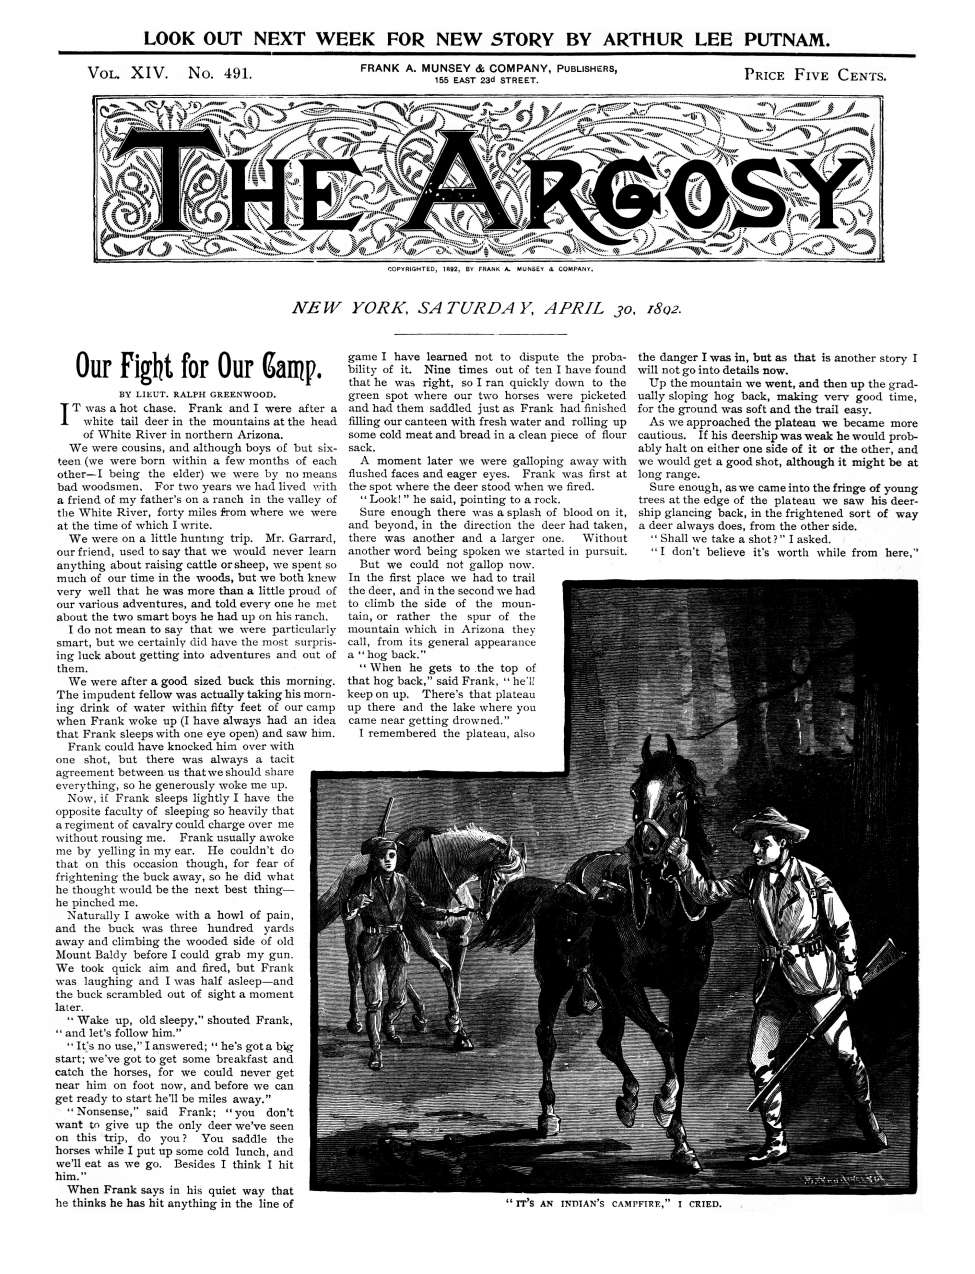 Comic Book Cover For The Argosy v14 491